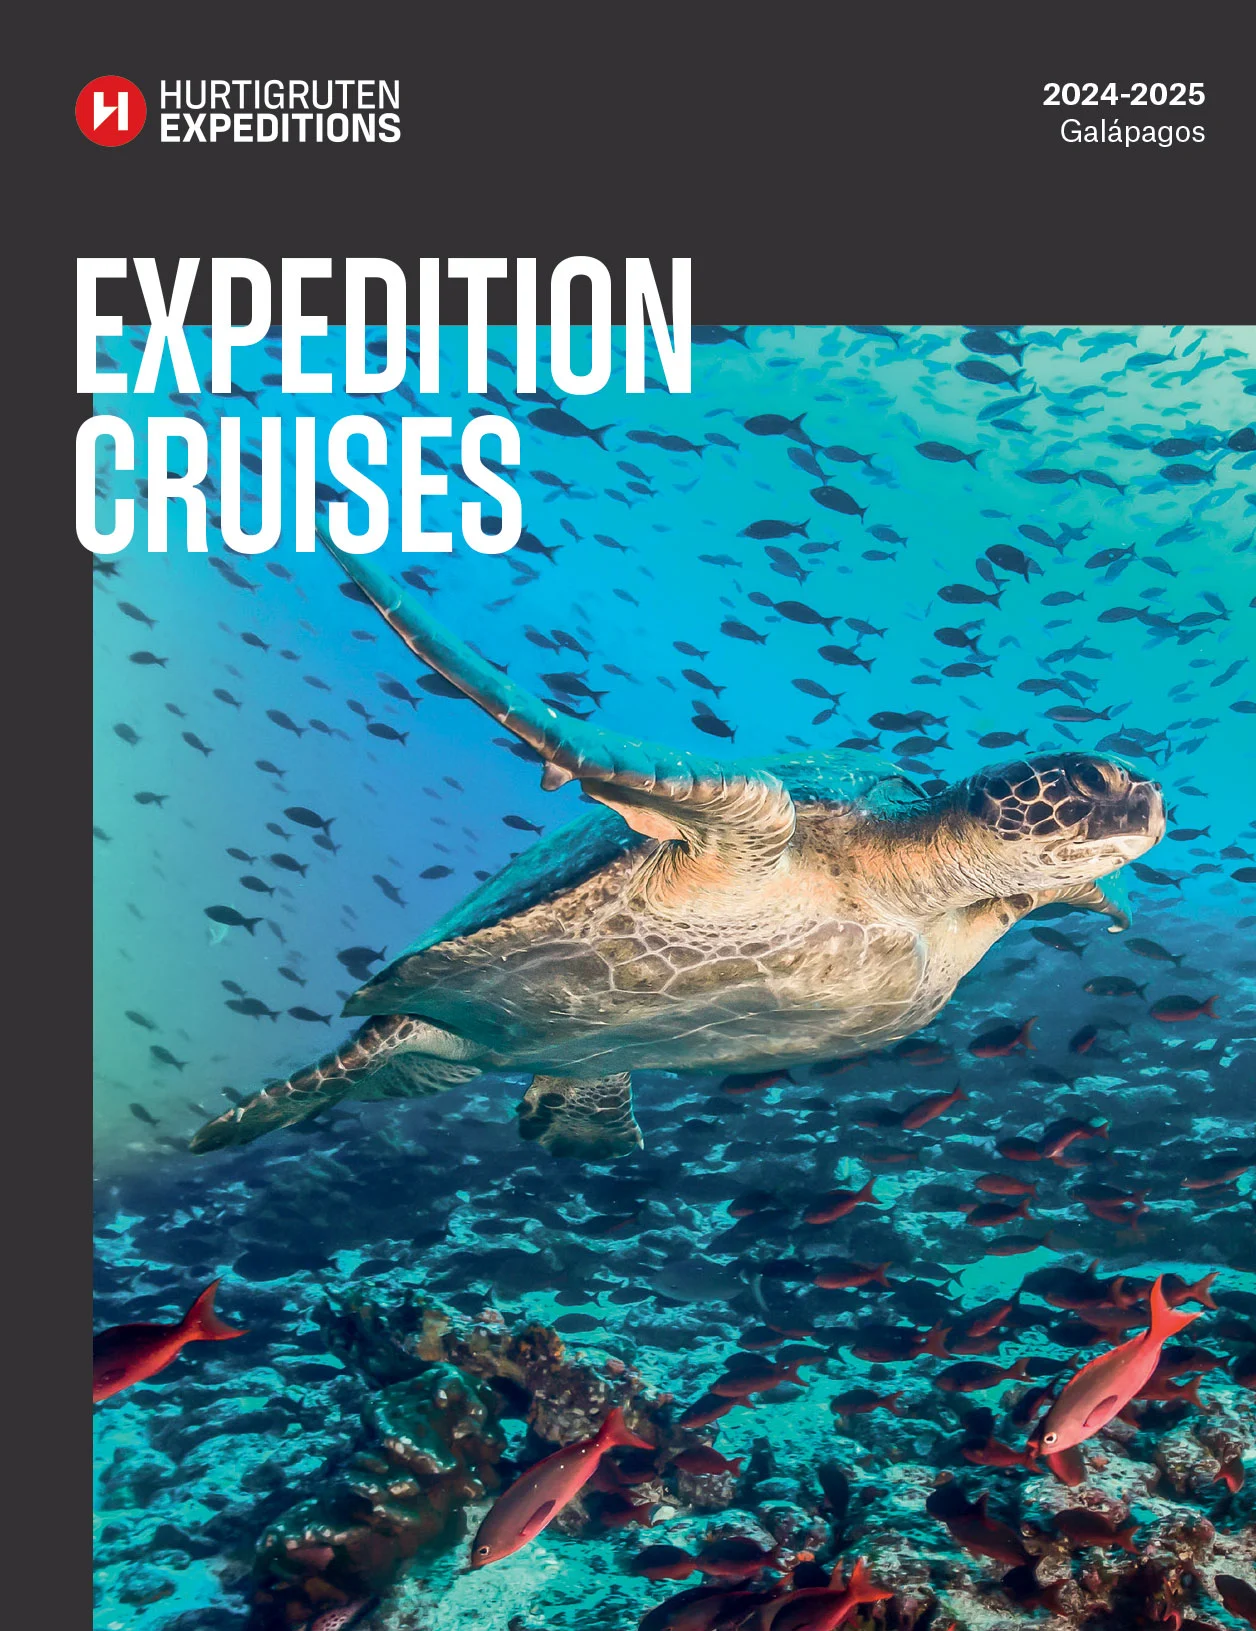 US Galápagos Brochure Cover 2024-2025